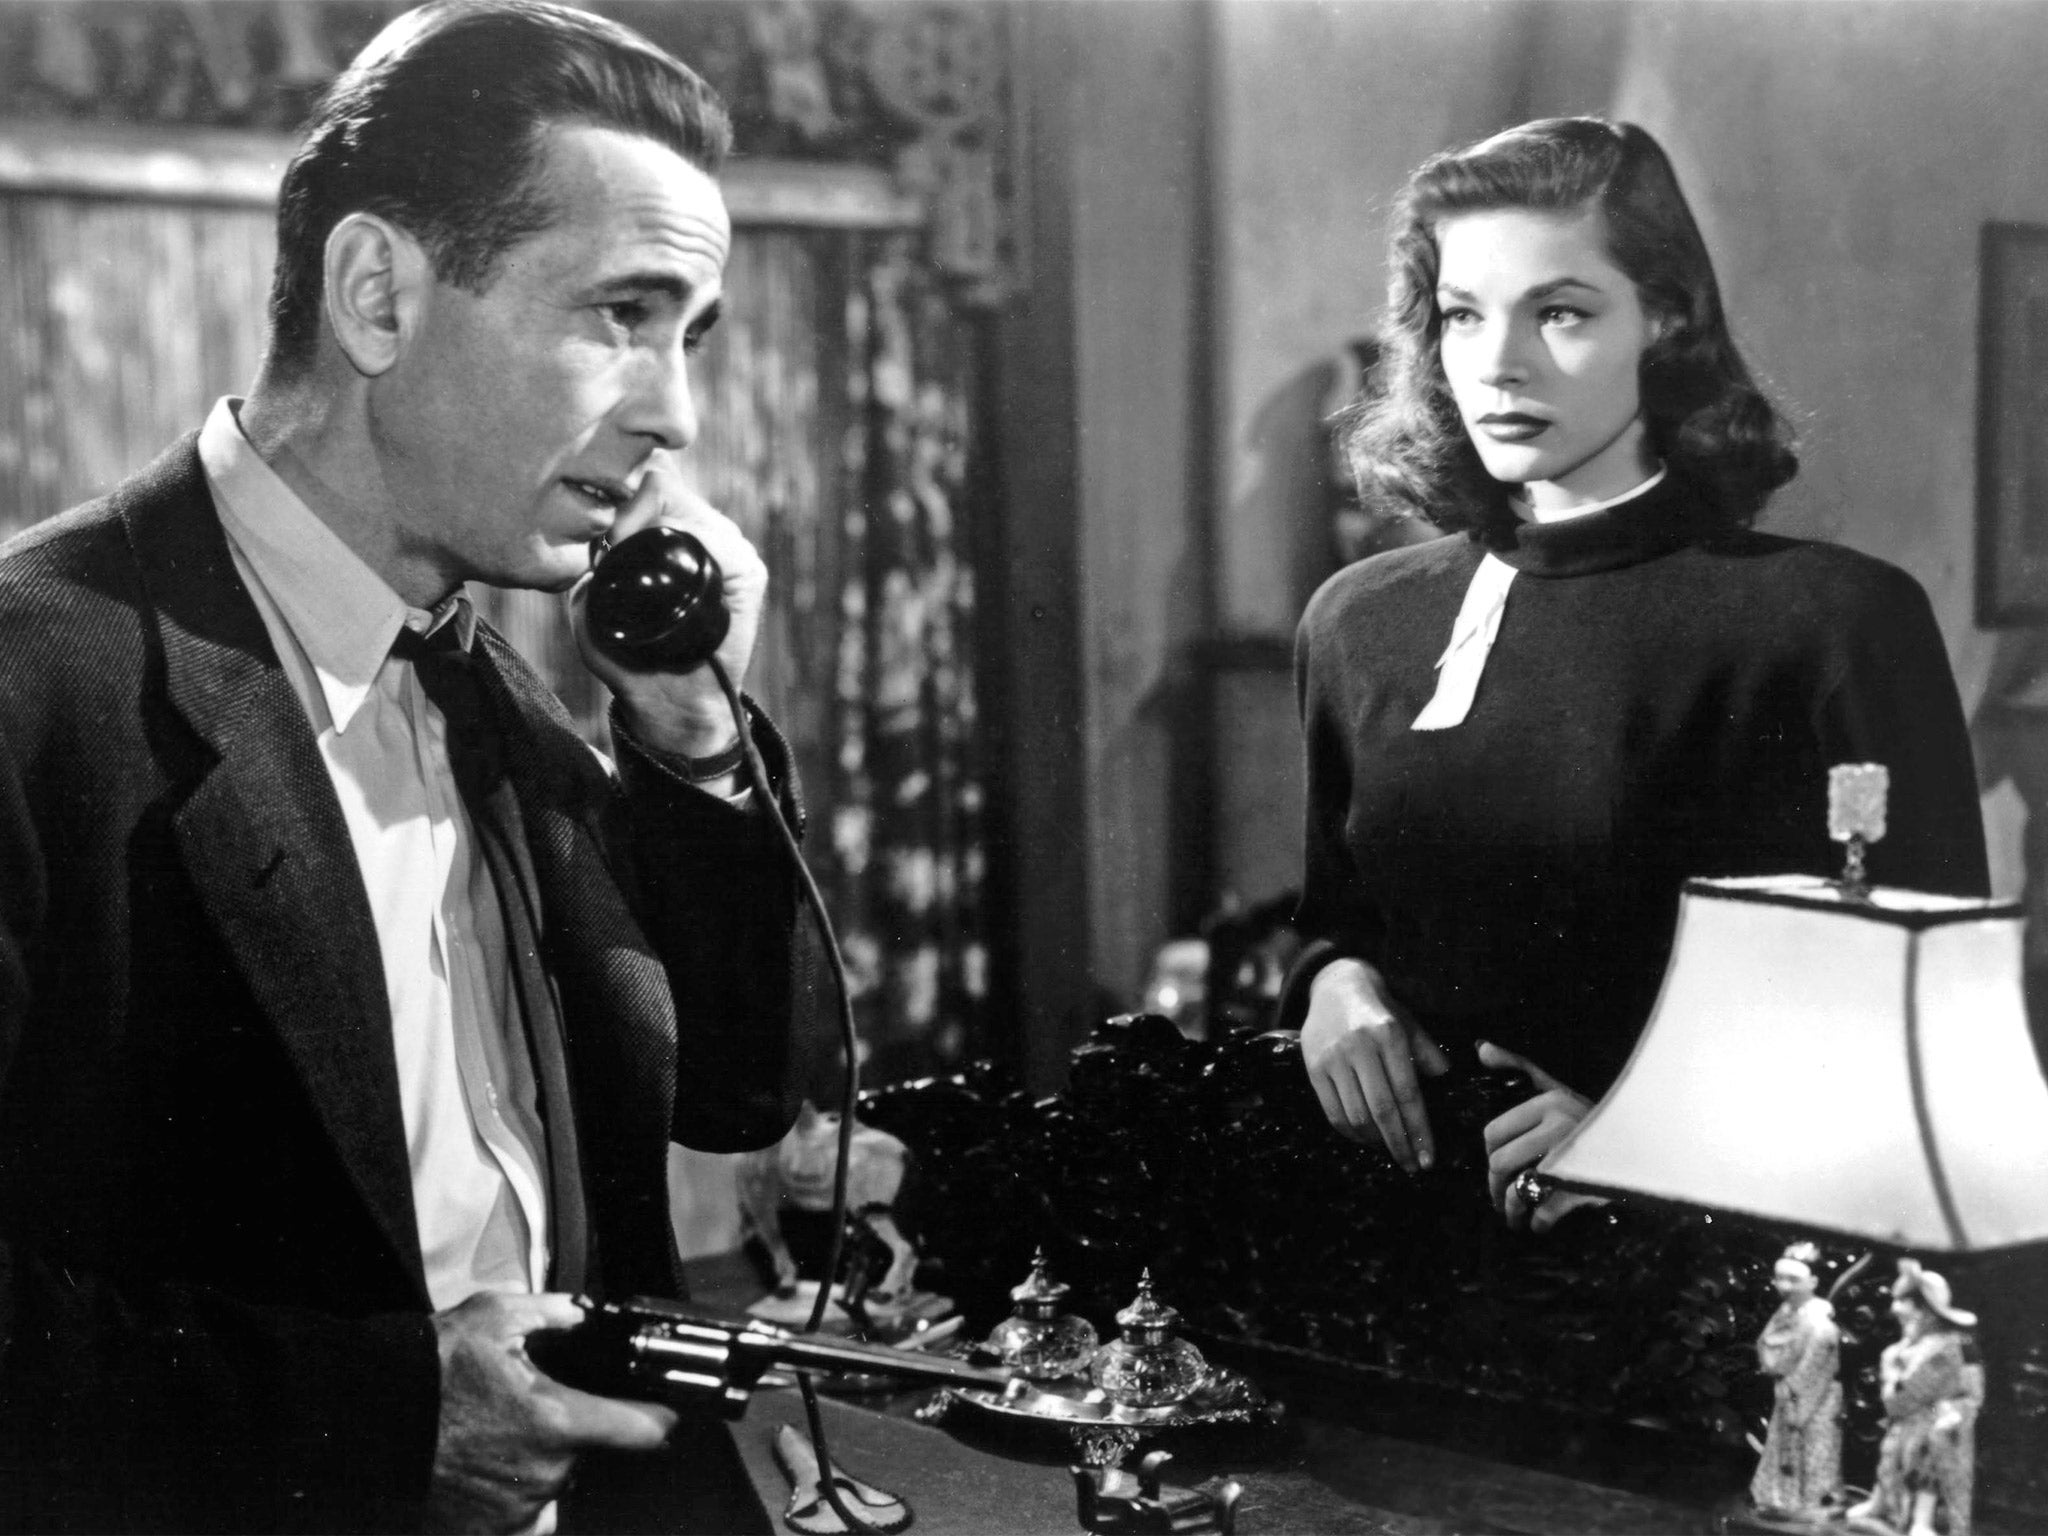 Humphrey Bogart in ‘The Big Sleep’, alongside Lauren Bacall